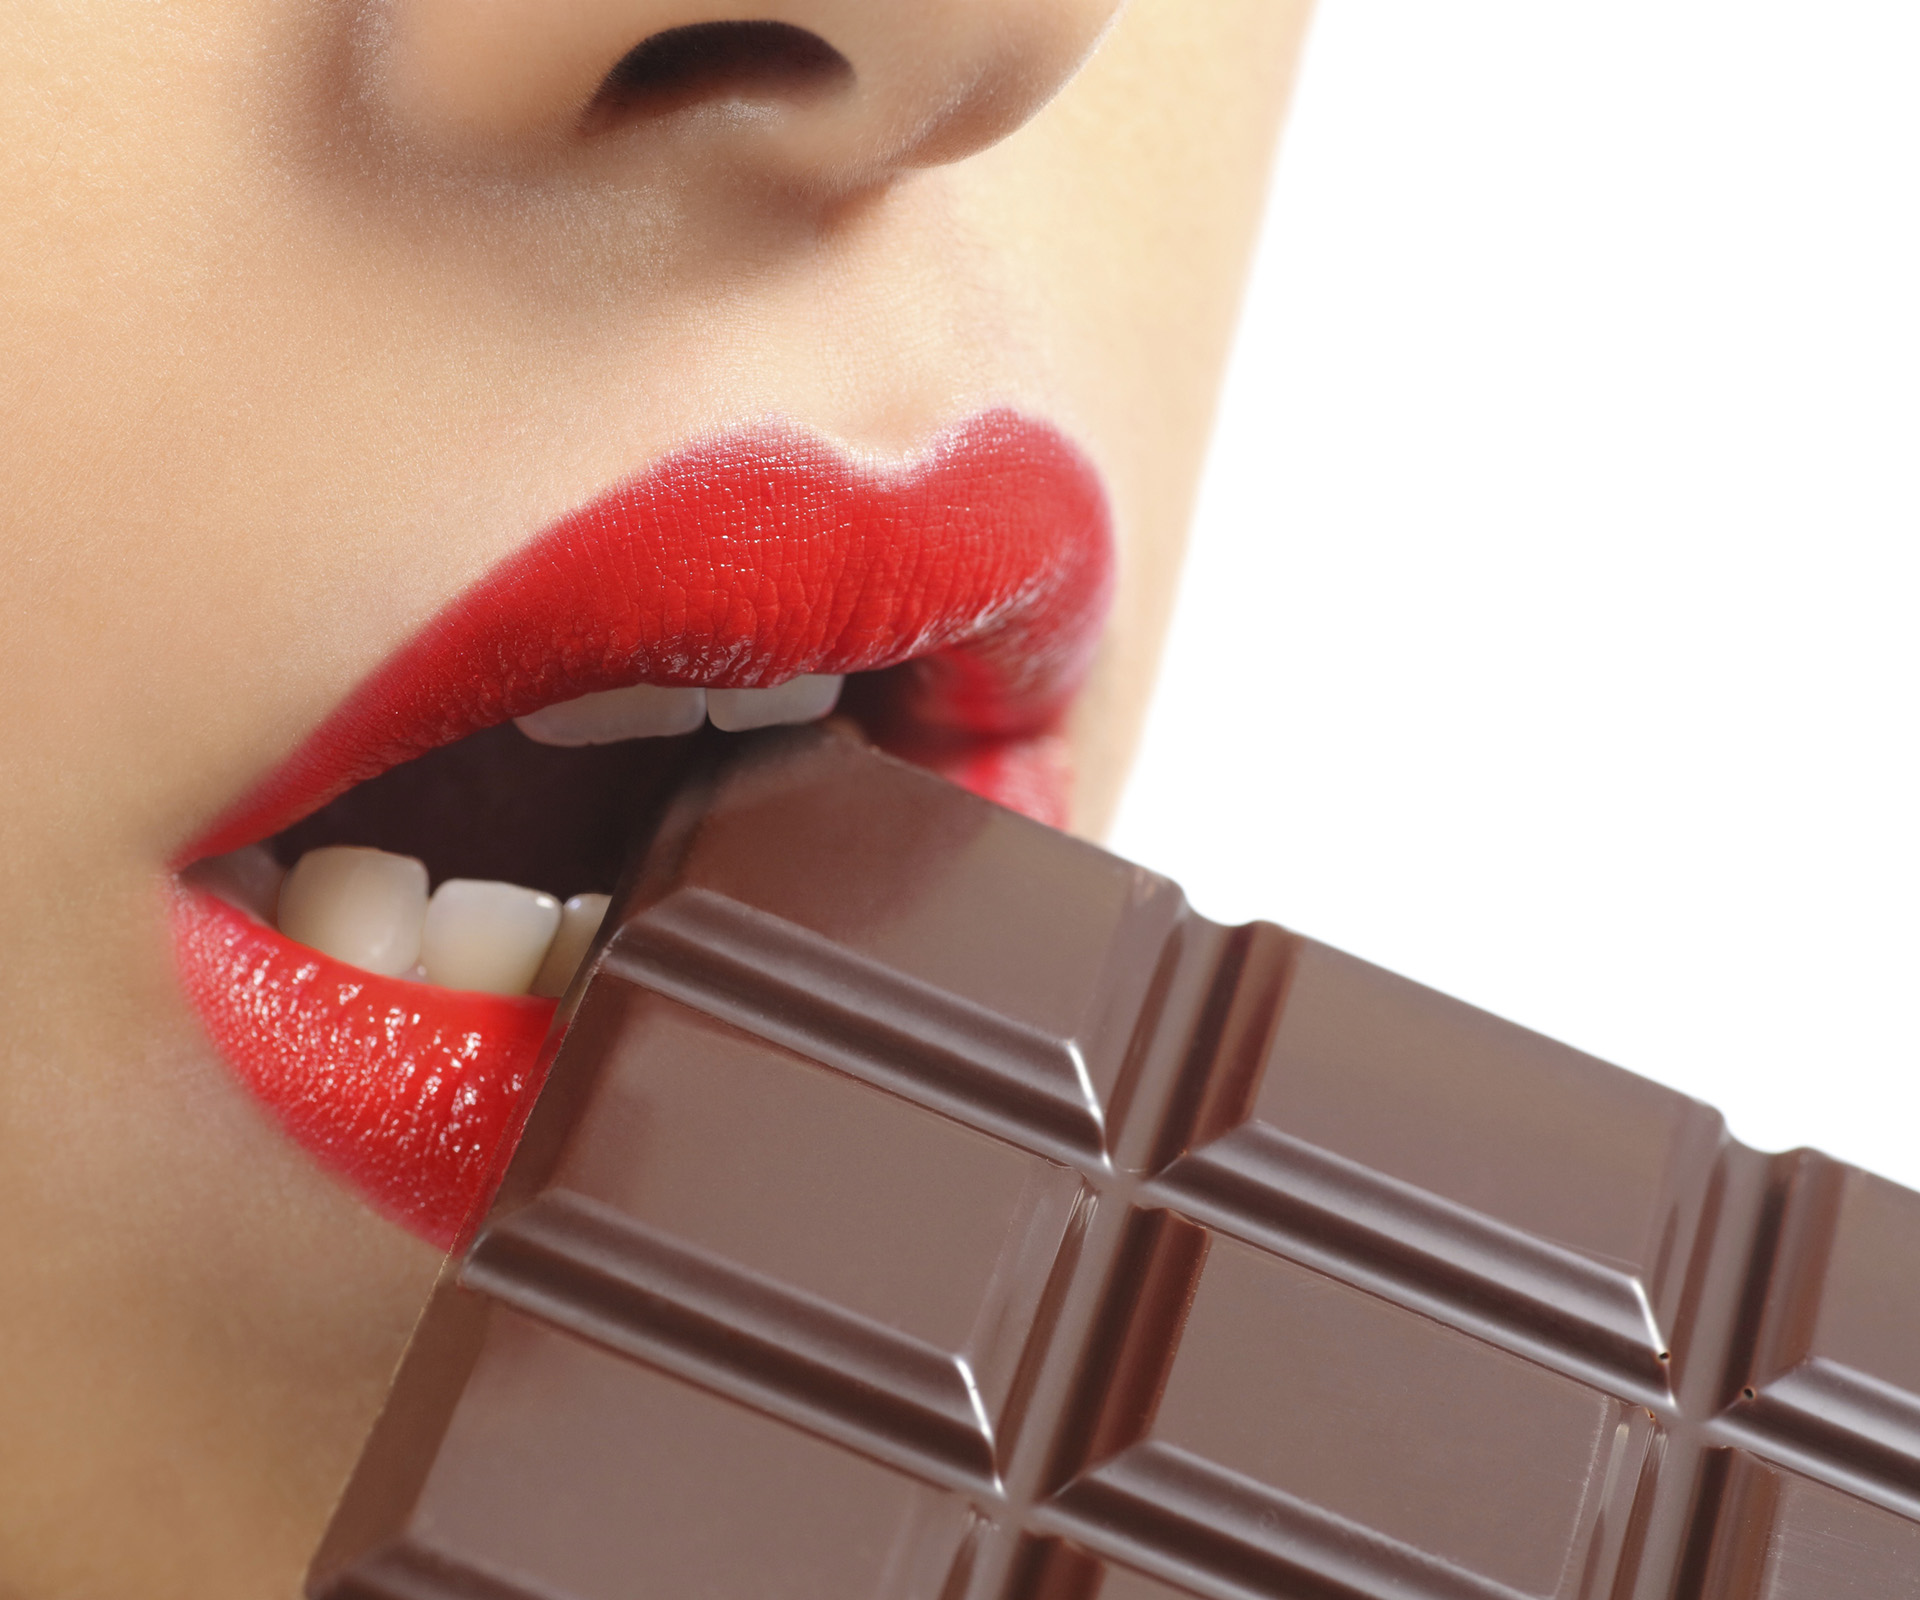 Woman eating chocolate 